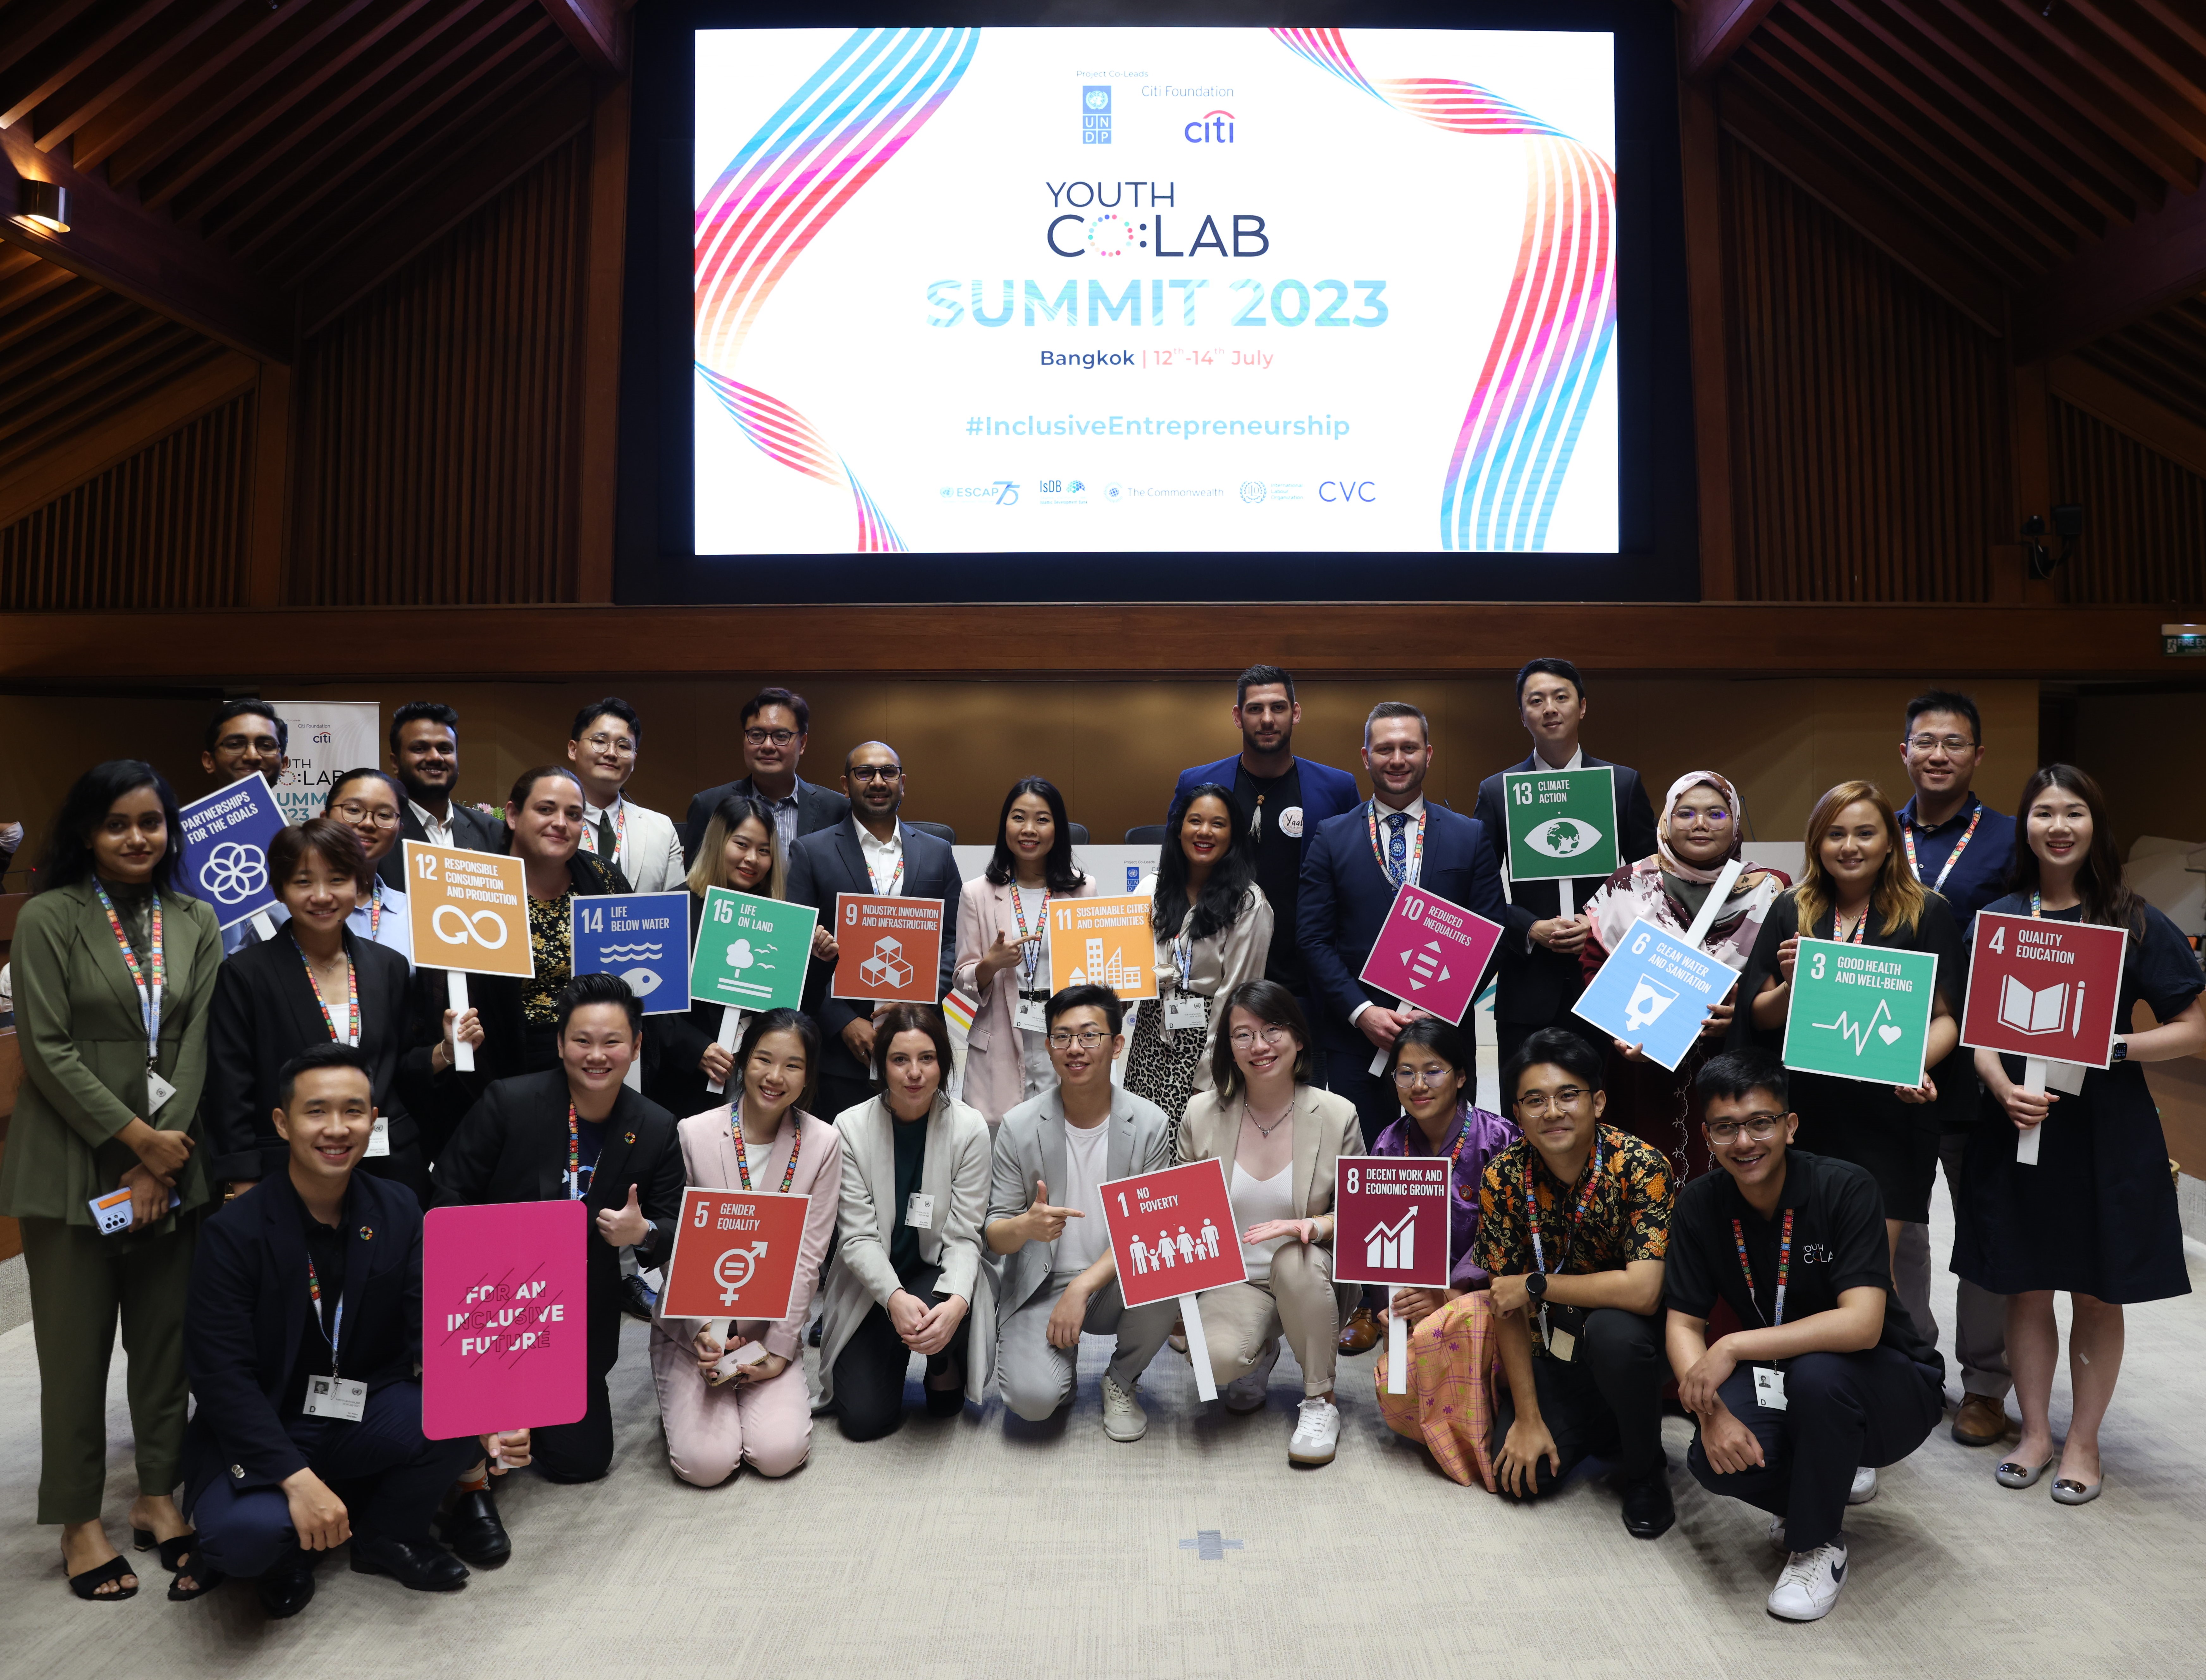 Youth Co:Lab Summit 2023